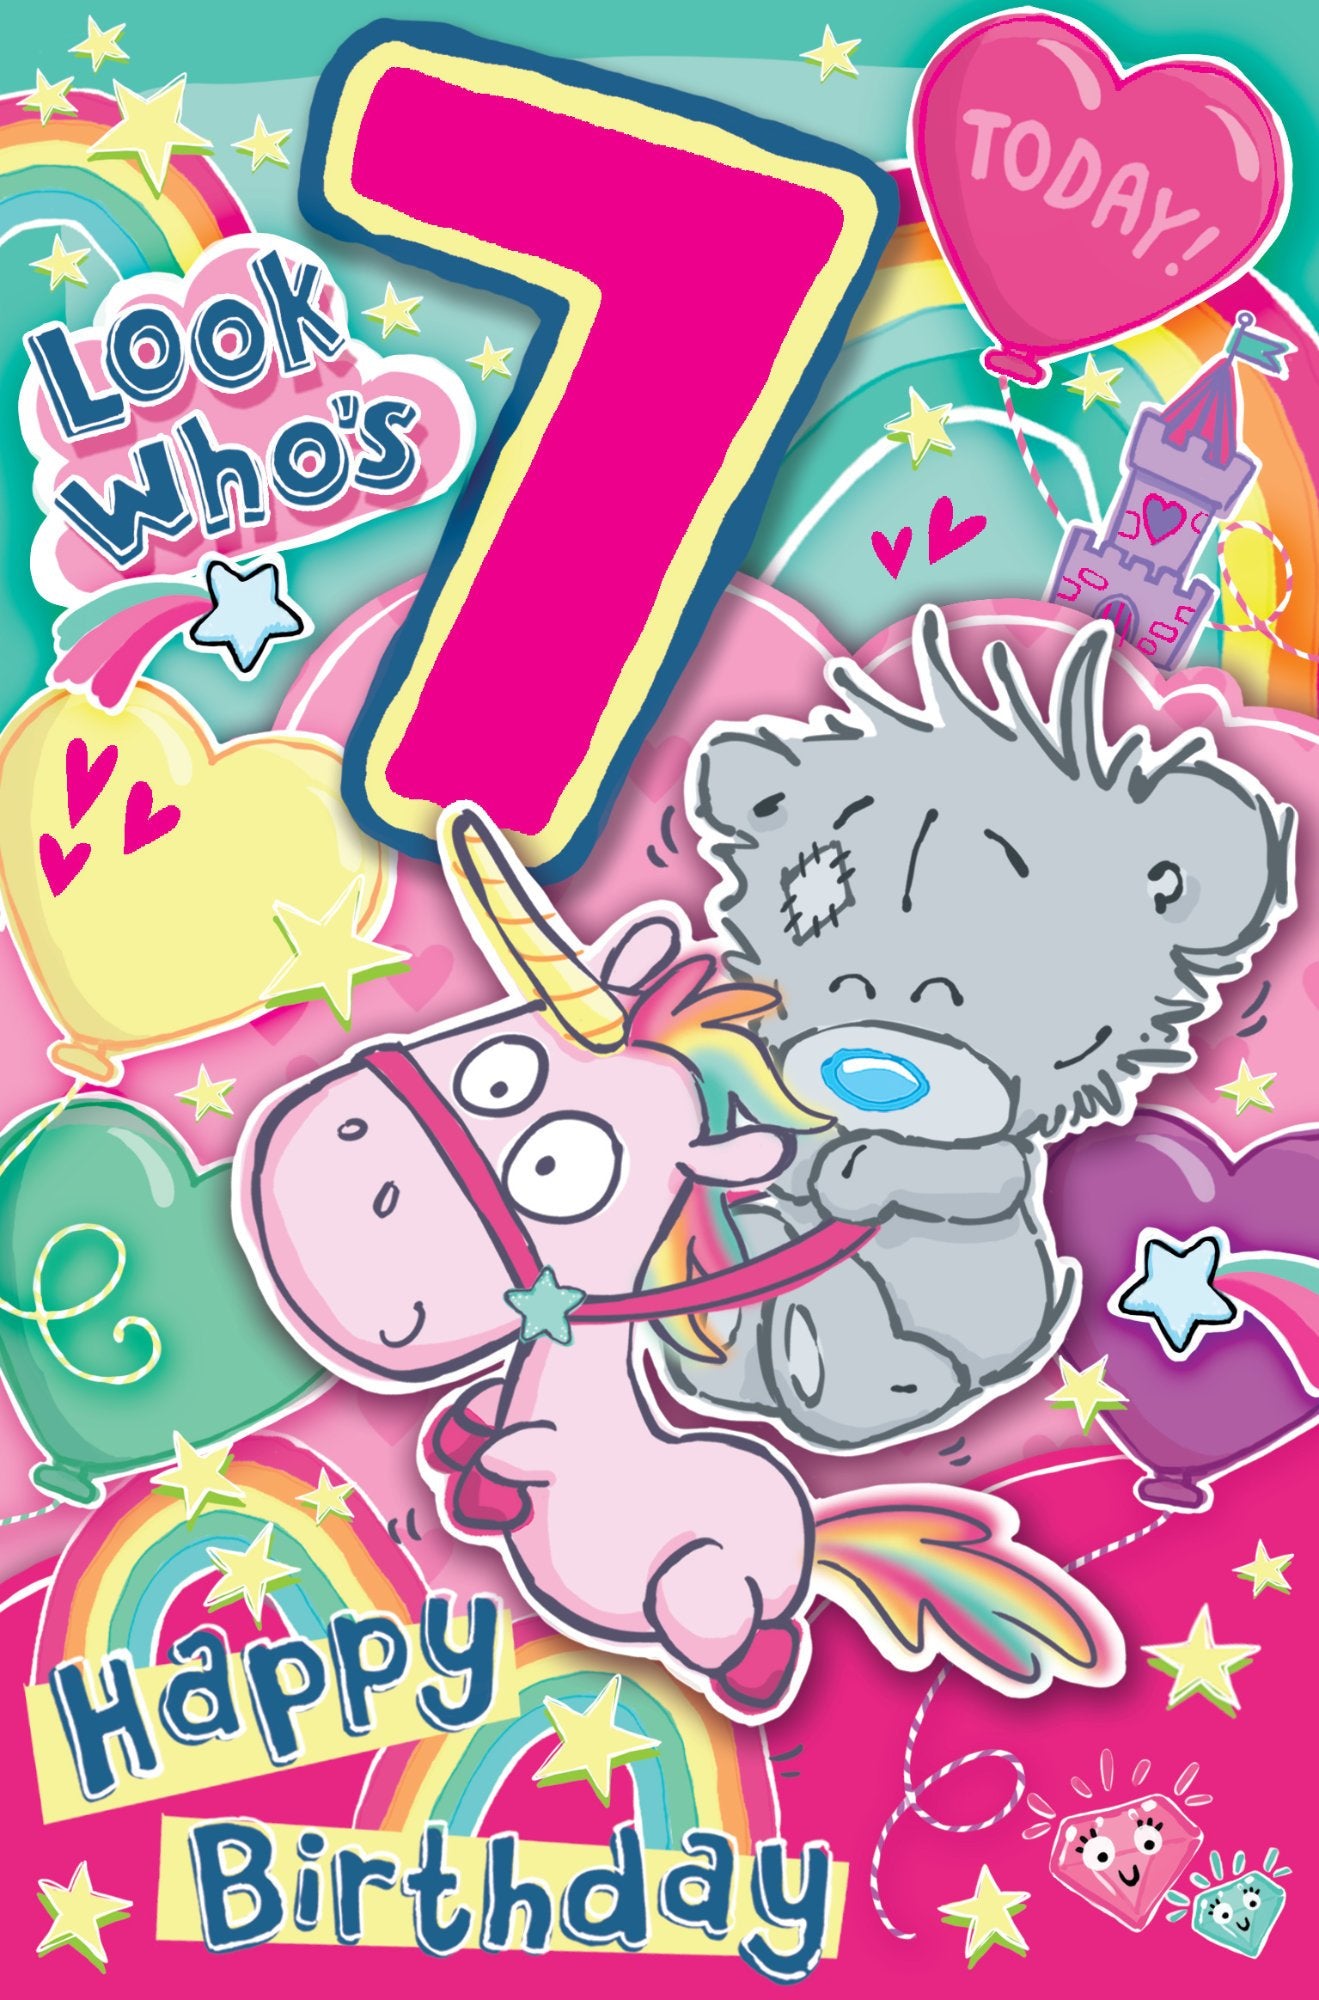 Photograph of 7th Birthday Teddy Unicorn Greetings Card at Nicole's Shop